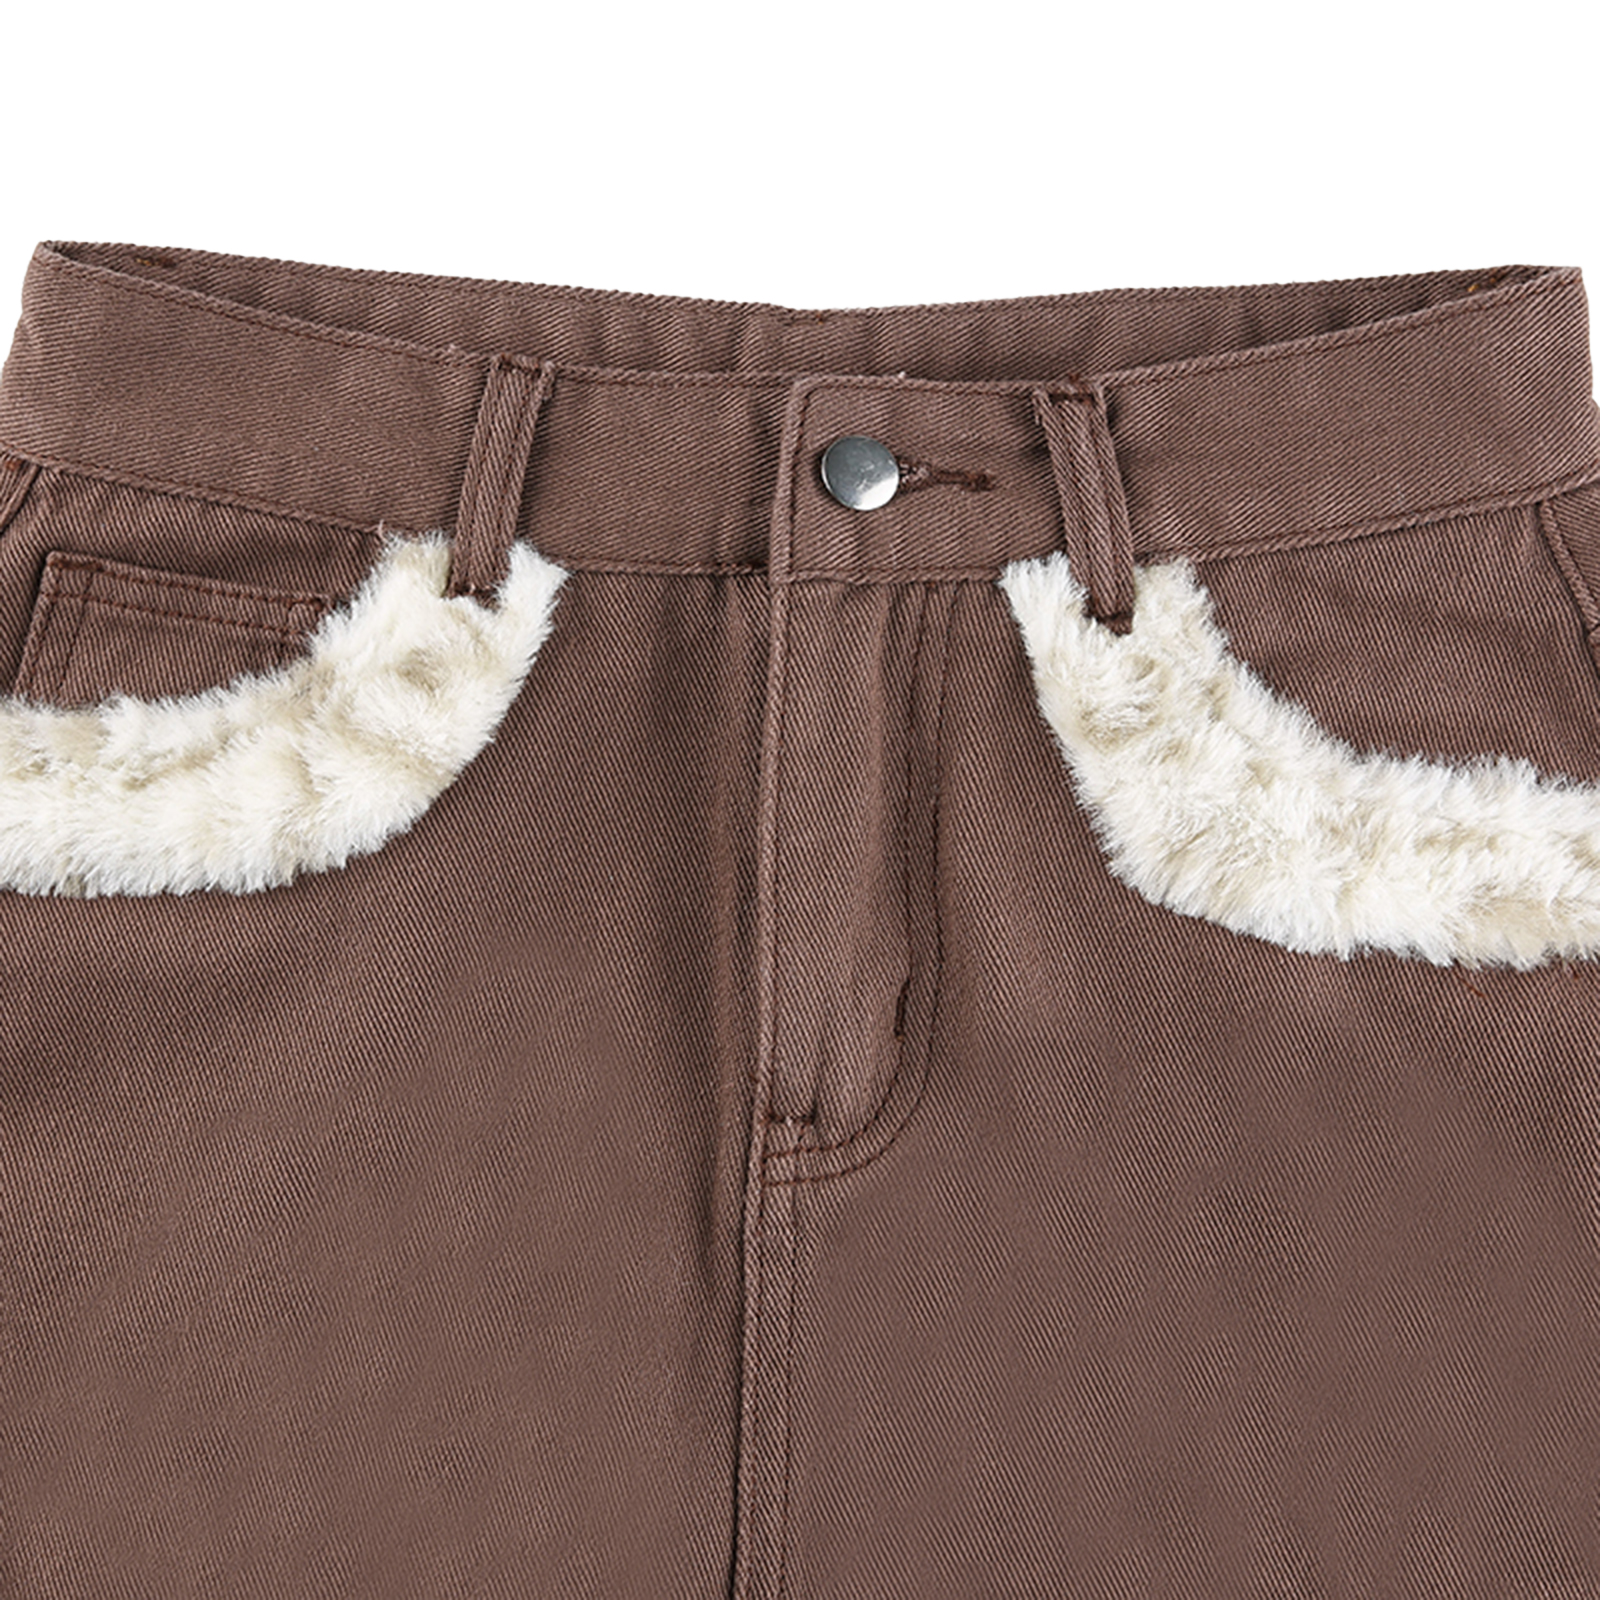 Puloru Women's Mini Denim Skirt, Casual High Waist Solid Color Short Skirt with Leopard Faux Fur Trim - image 3 of 6